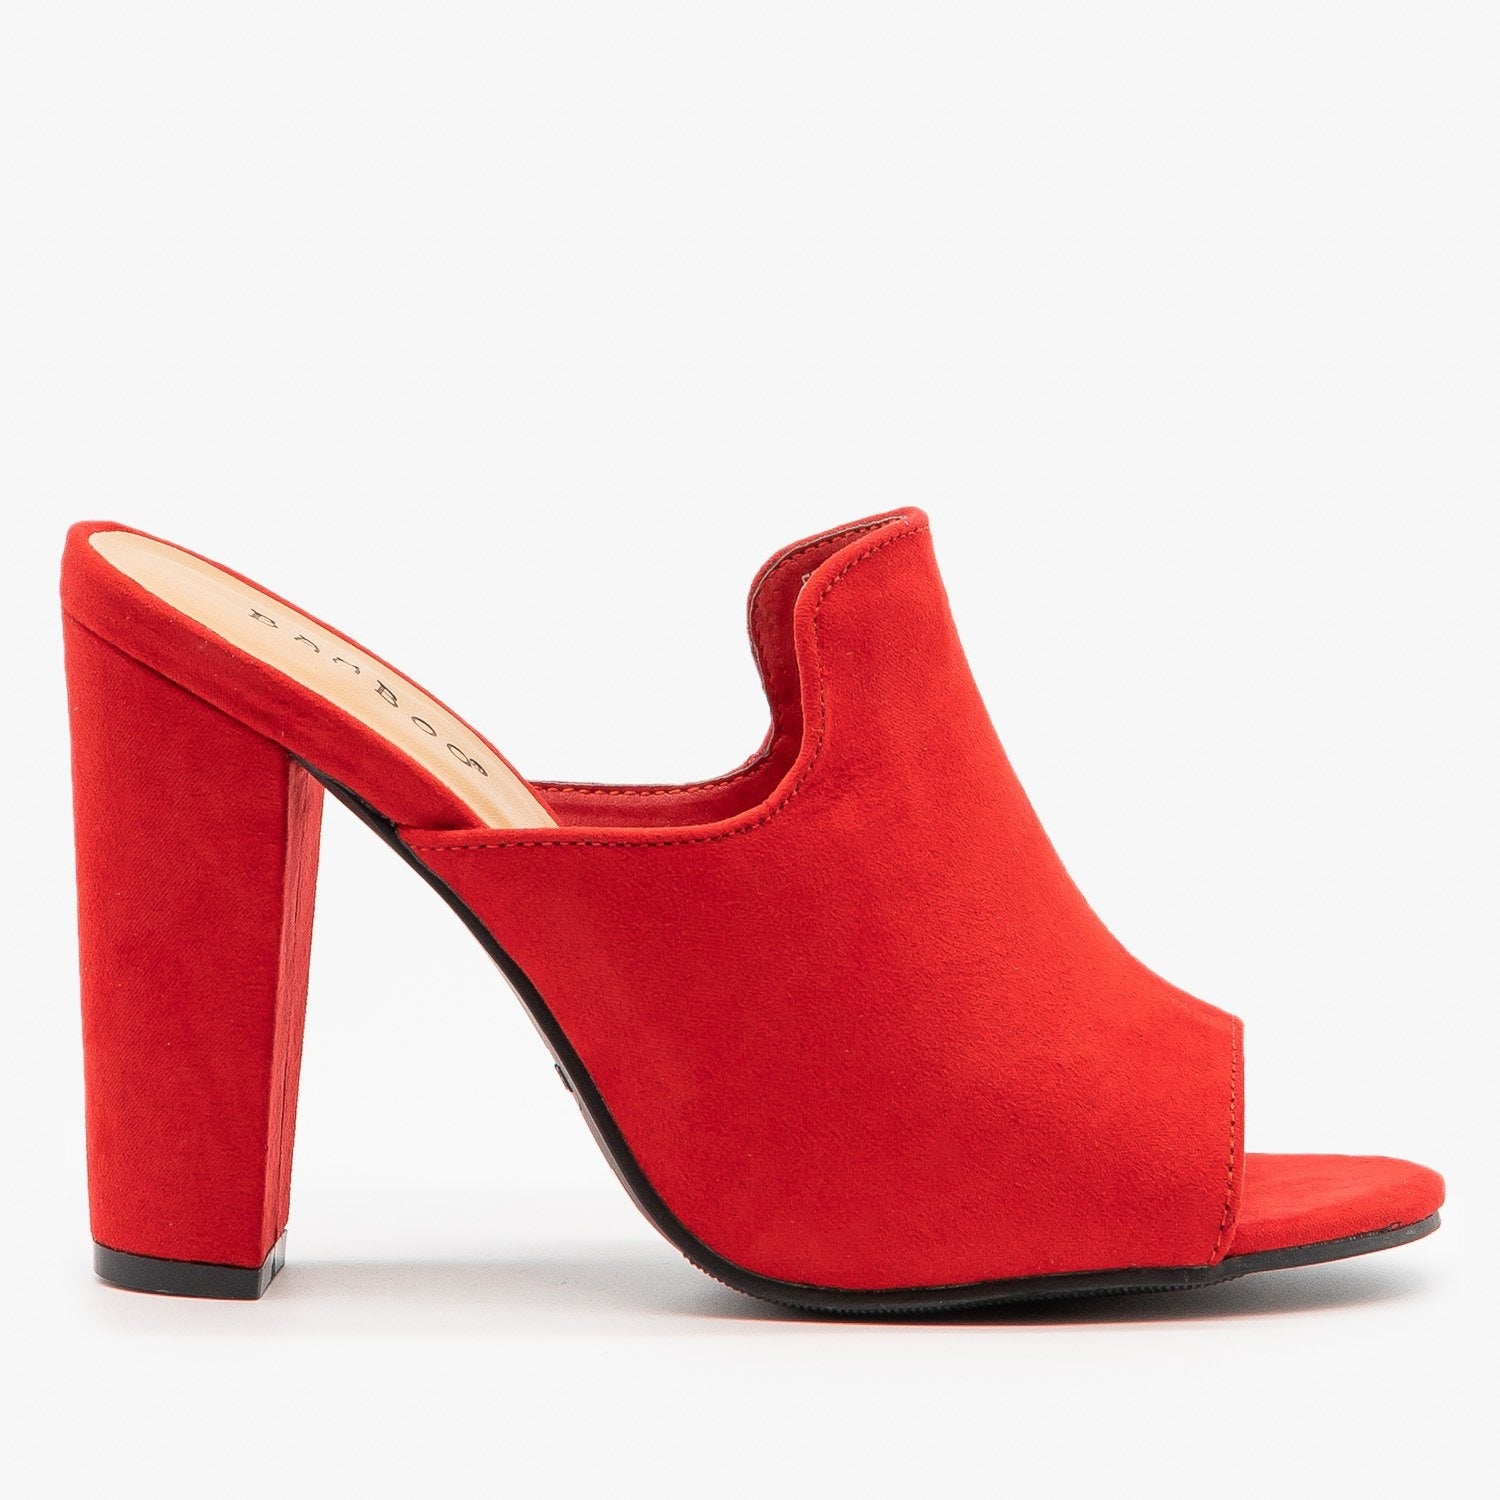 red mule women's shoes